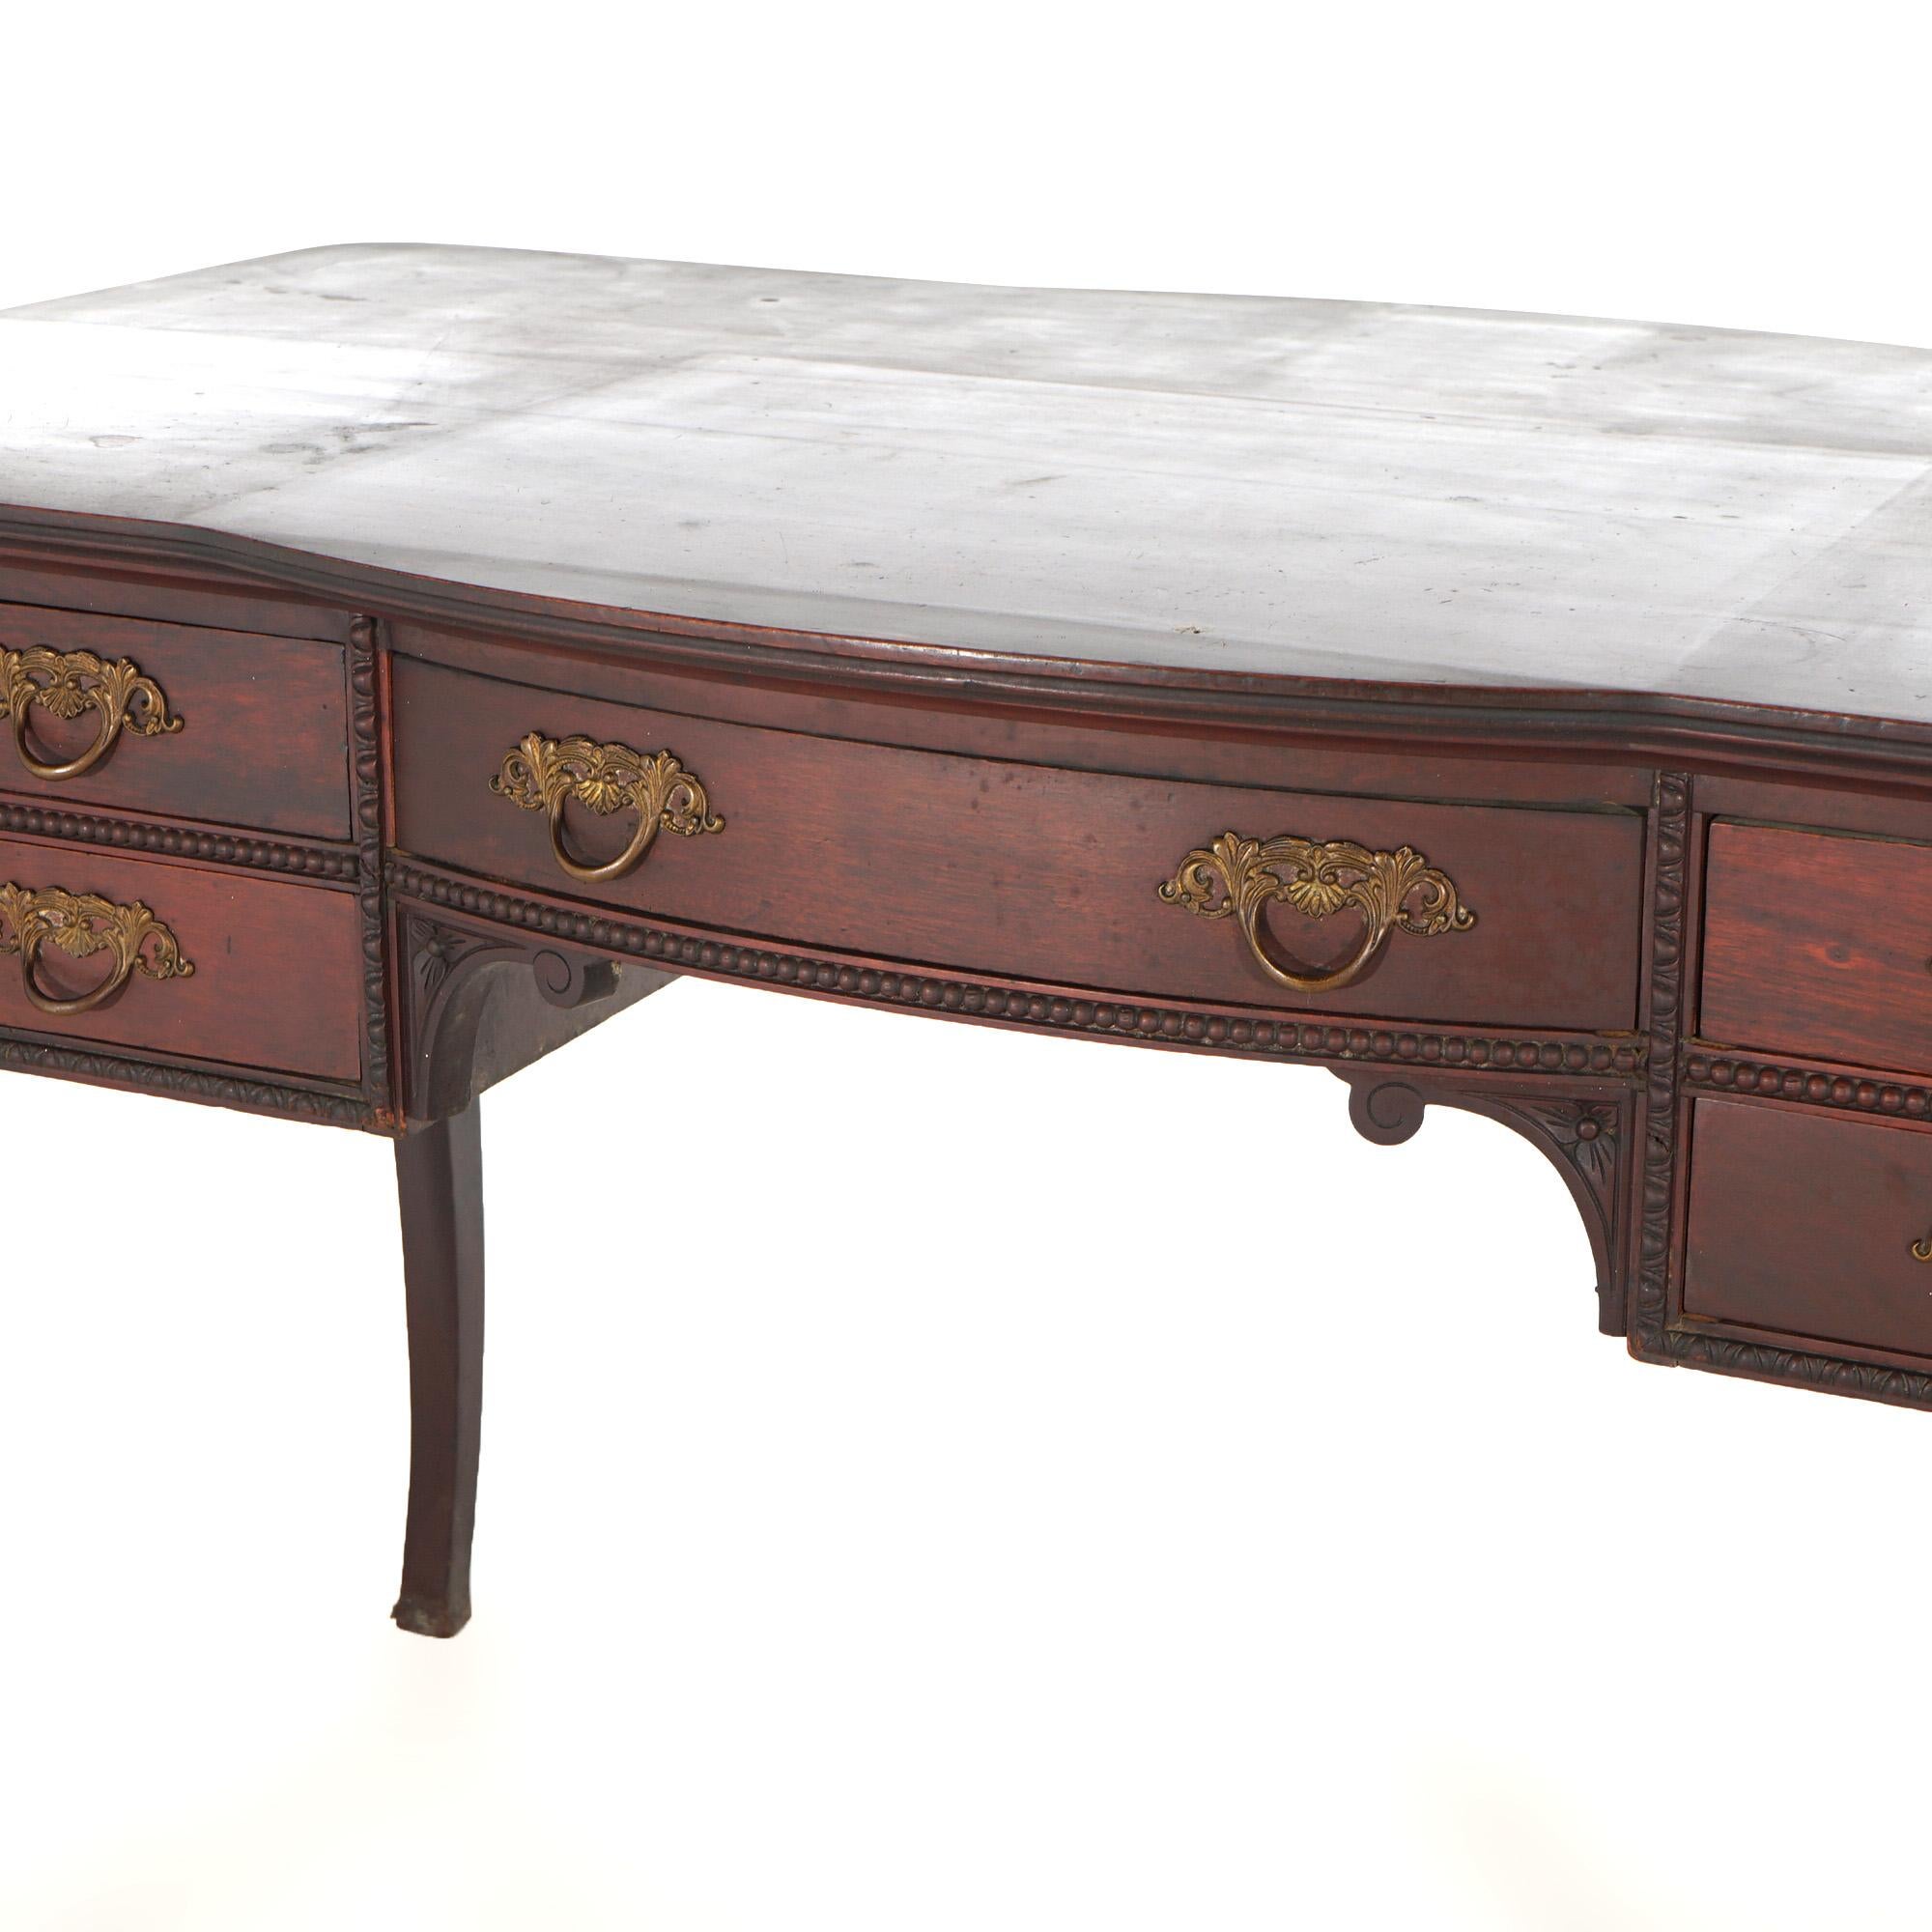 Antique French Mahogany & Ormolu Bureau Plat Writing Desk C1910 For Sale 8